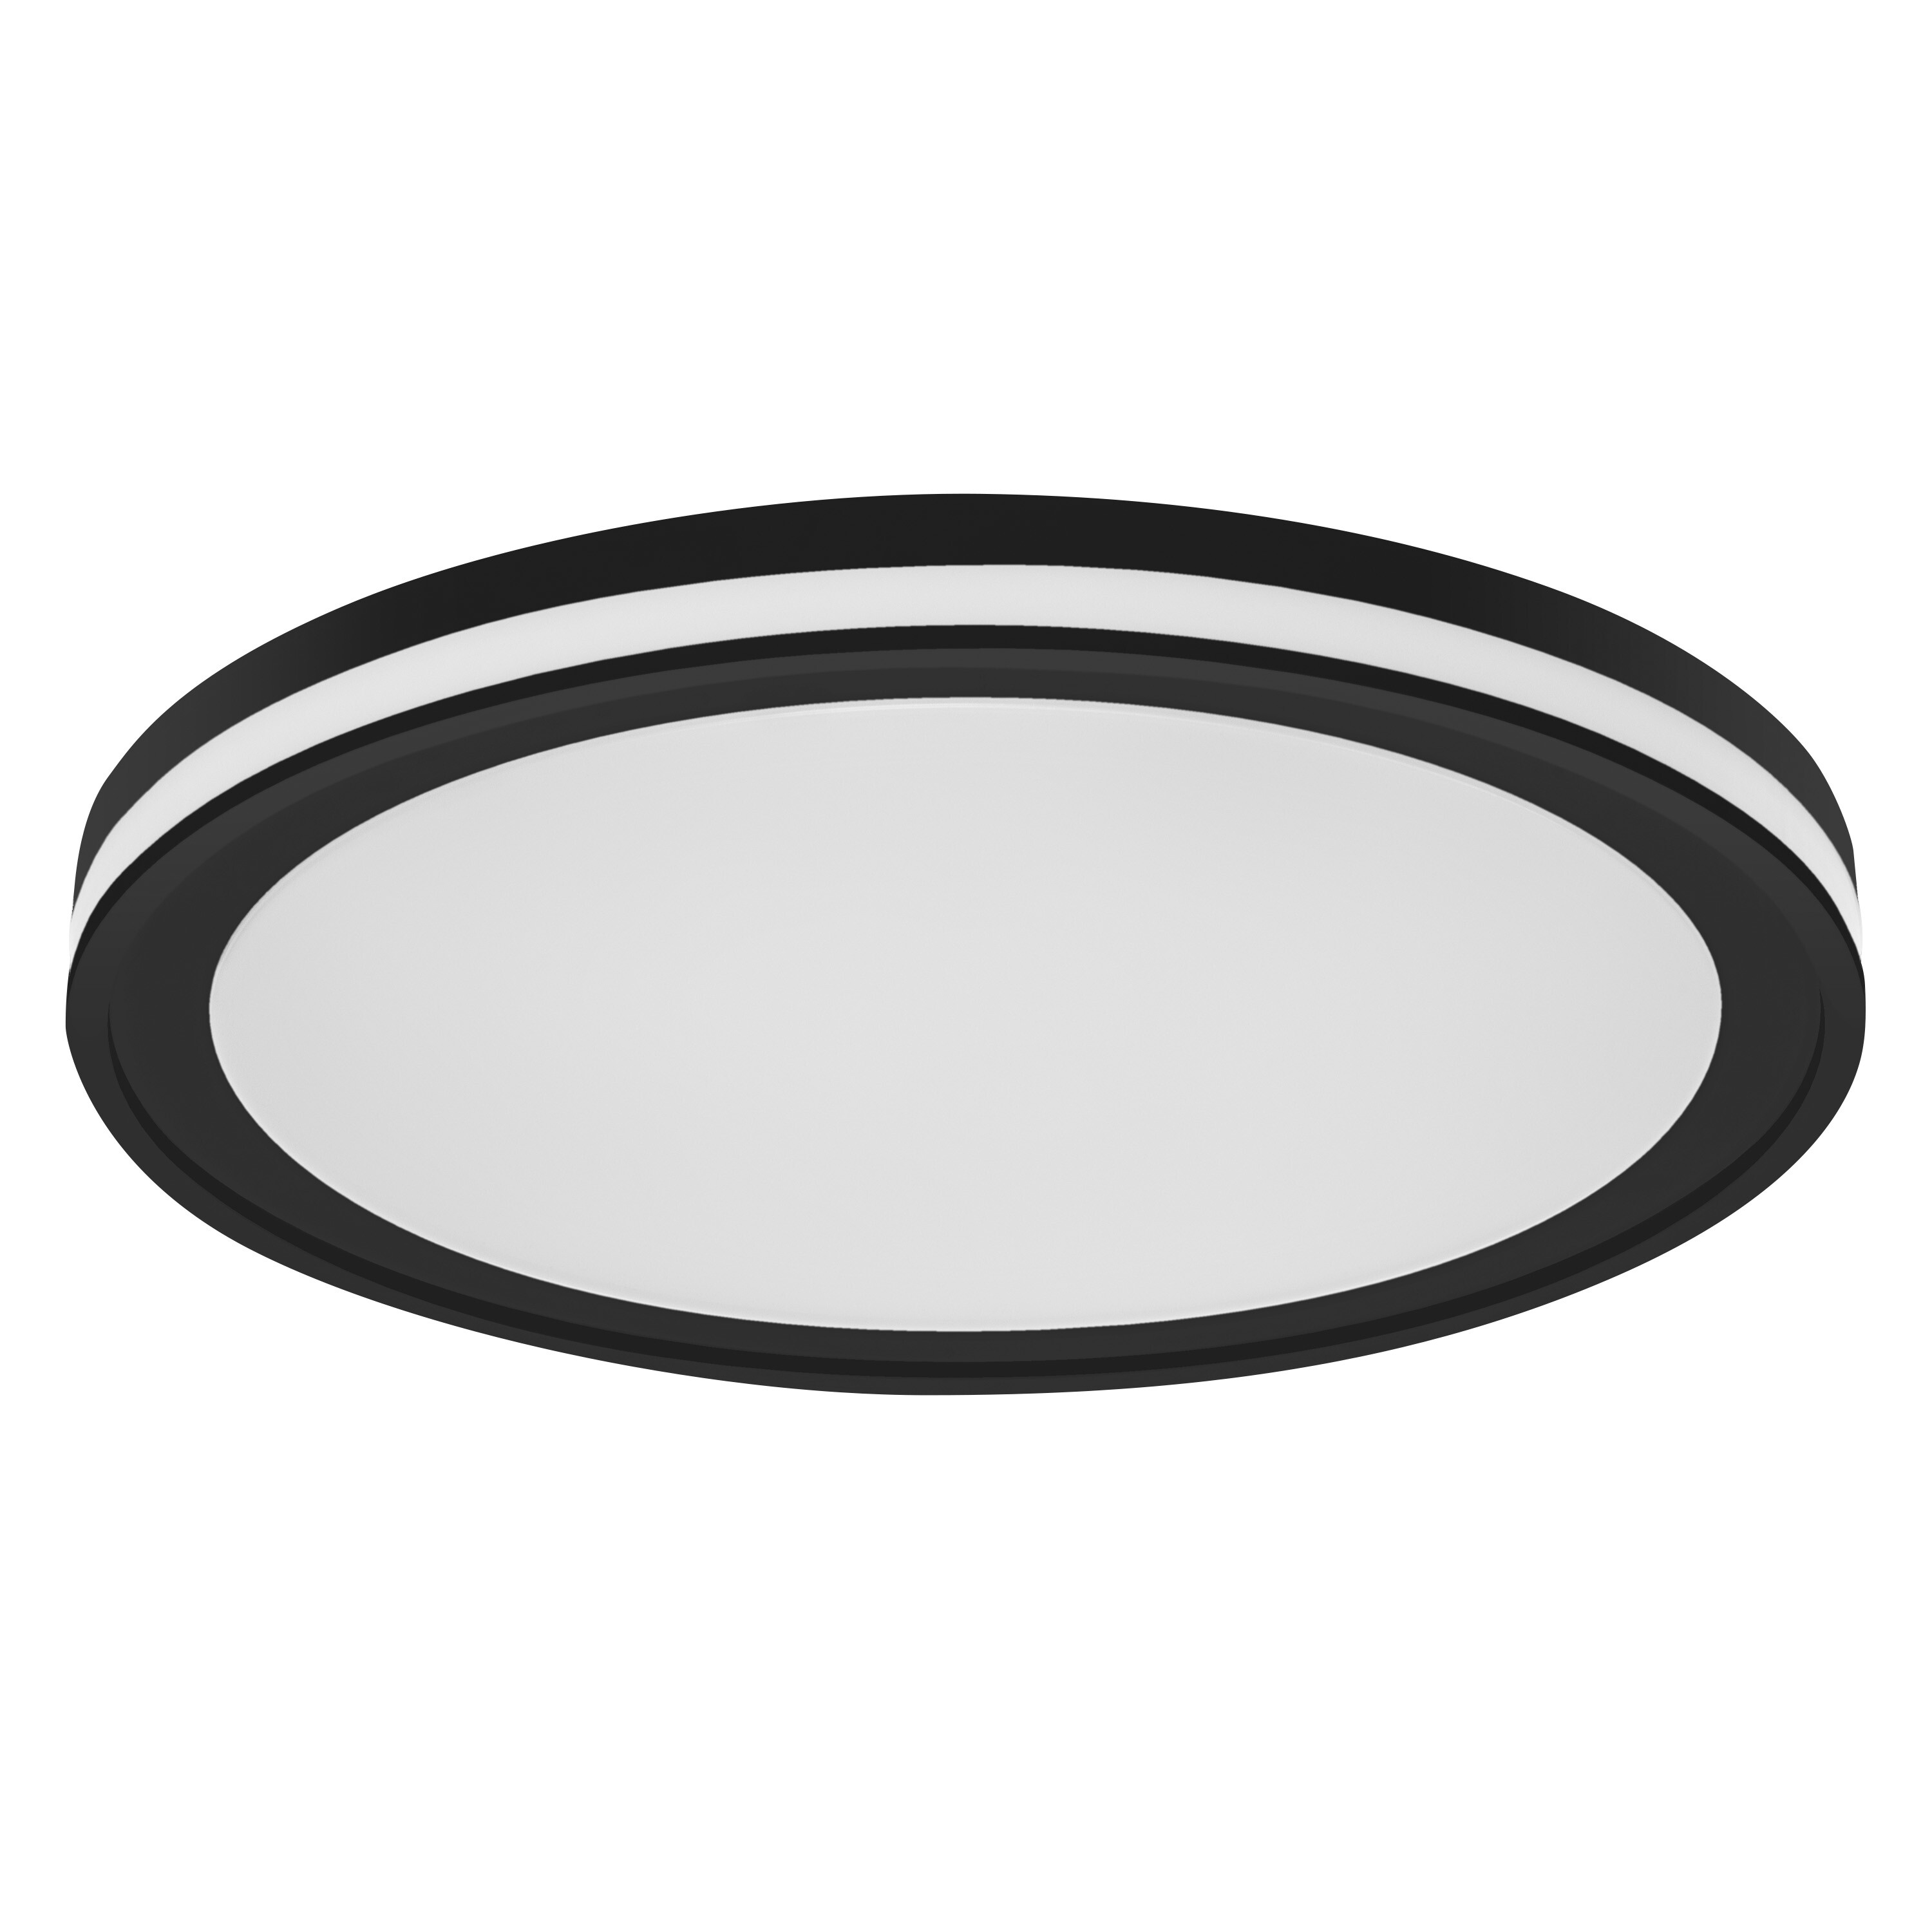 LEDVANCE SMART+ WIFI änderbar Deckenspots Lichfarbe Circle Orbis